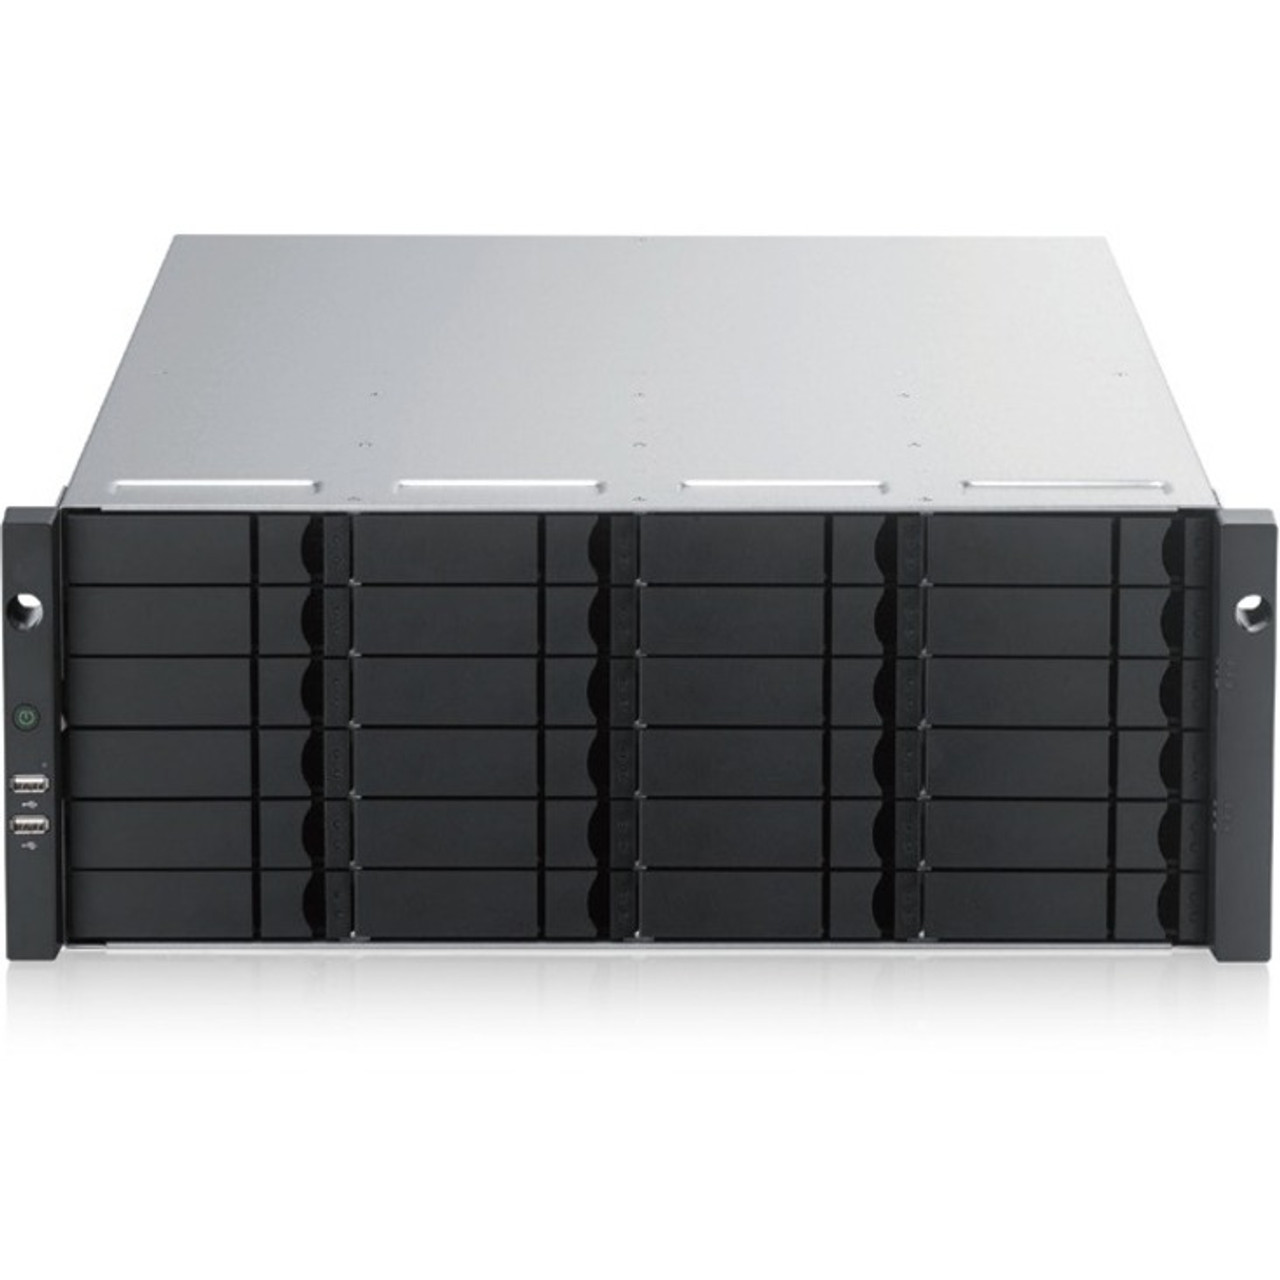 Promise Vess A6800 Video Storage Appliance - 96 TB HDD - VA680SHHAANM